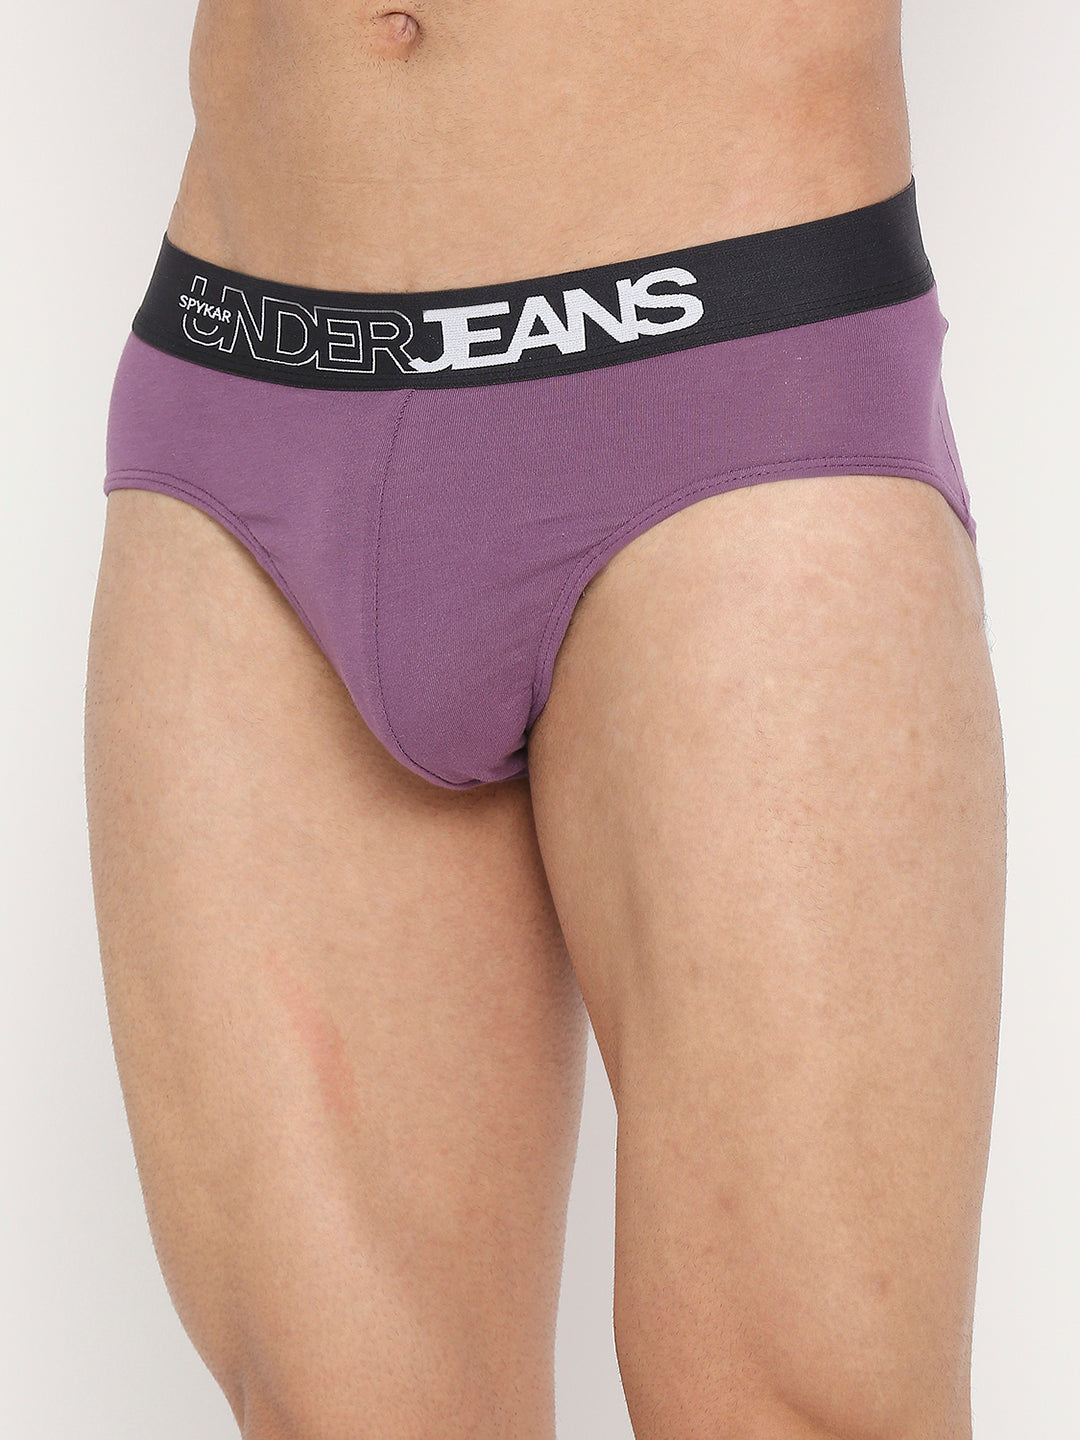 Men Premium Assorted Cotton Blend Brief Pack of 2 - UnderJeans by Spykar